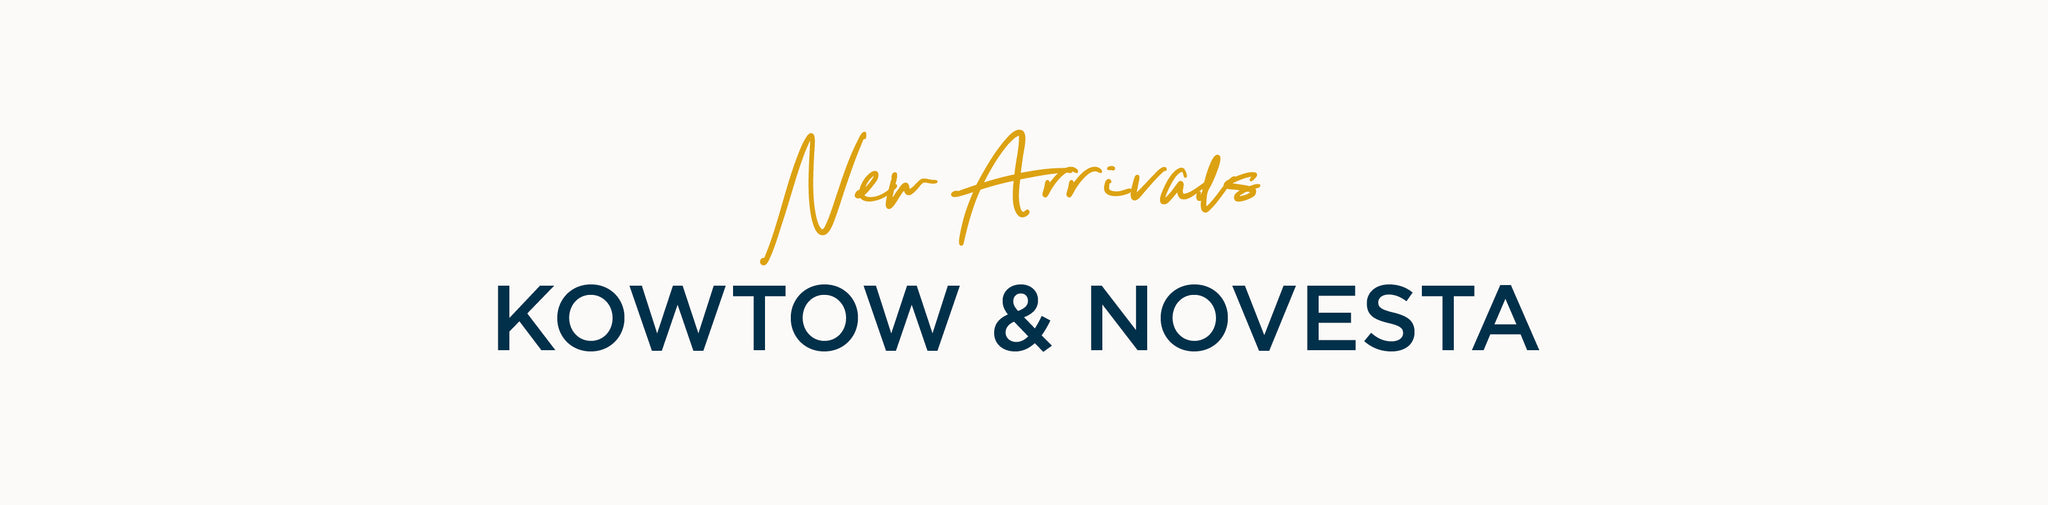 NEW ARRIVALS - KOWTOW & NOVESTA